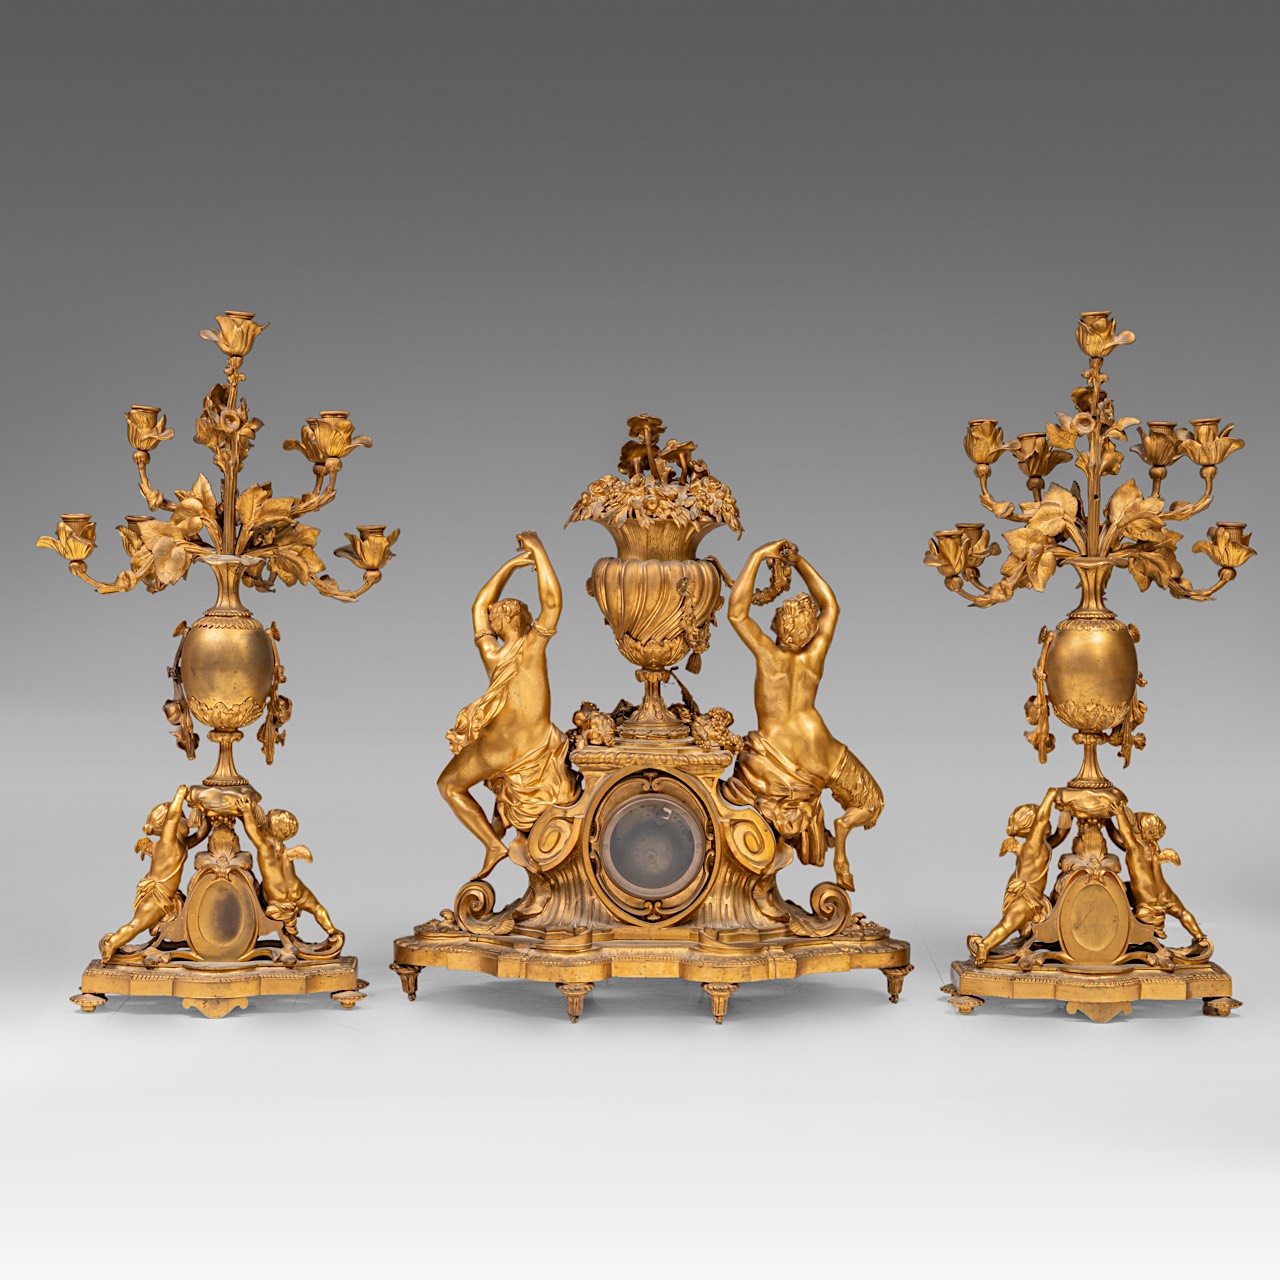 An imposing three-piece Napoleon III gilt bronze mantle clock, Lerolle Freres, Paris, H 70 - 82 cm - Image 3 of 12